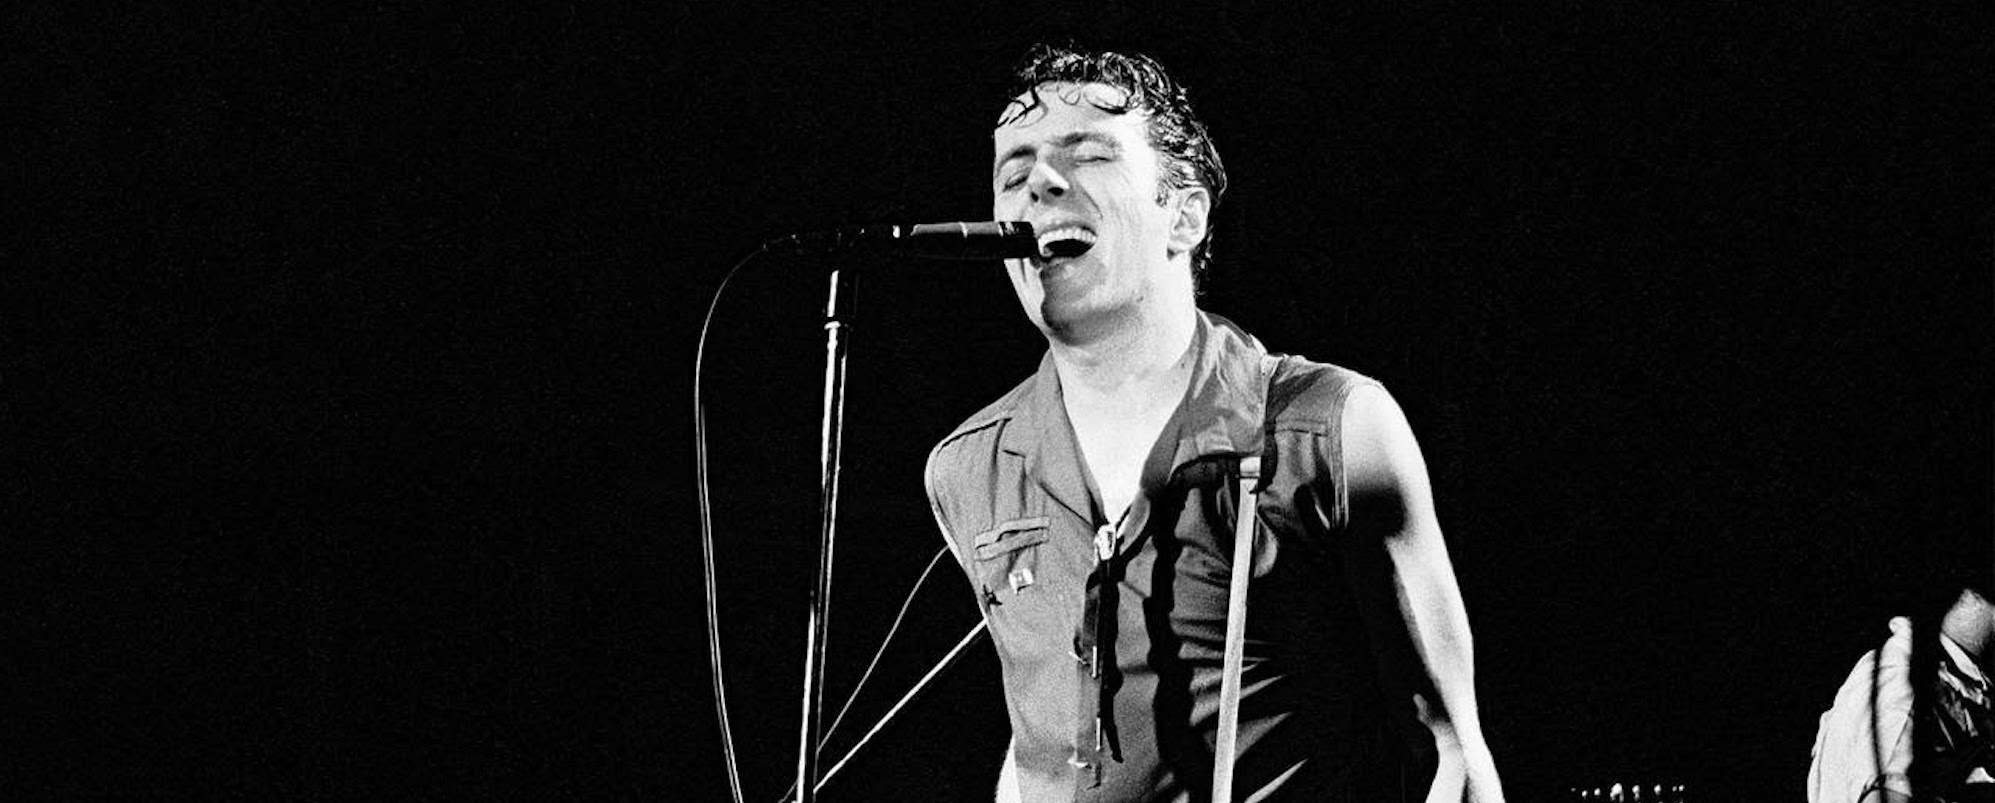 The Clash’s Joe Strummer Gets 71st Birthday Tribute at Punk Rock Museum